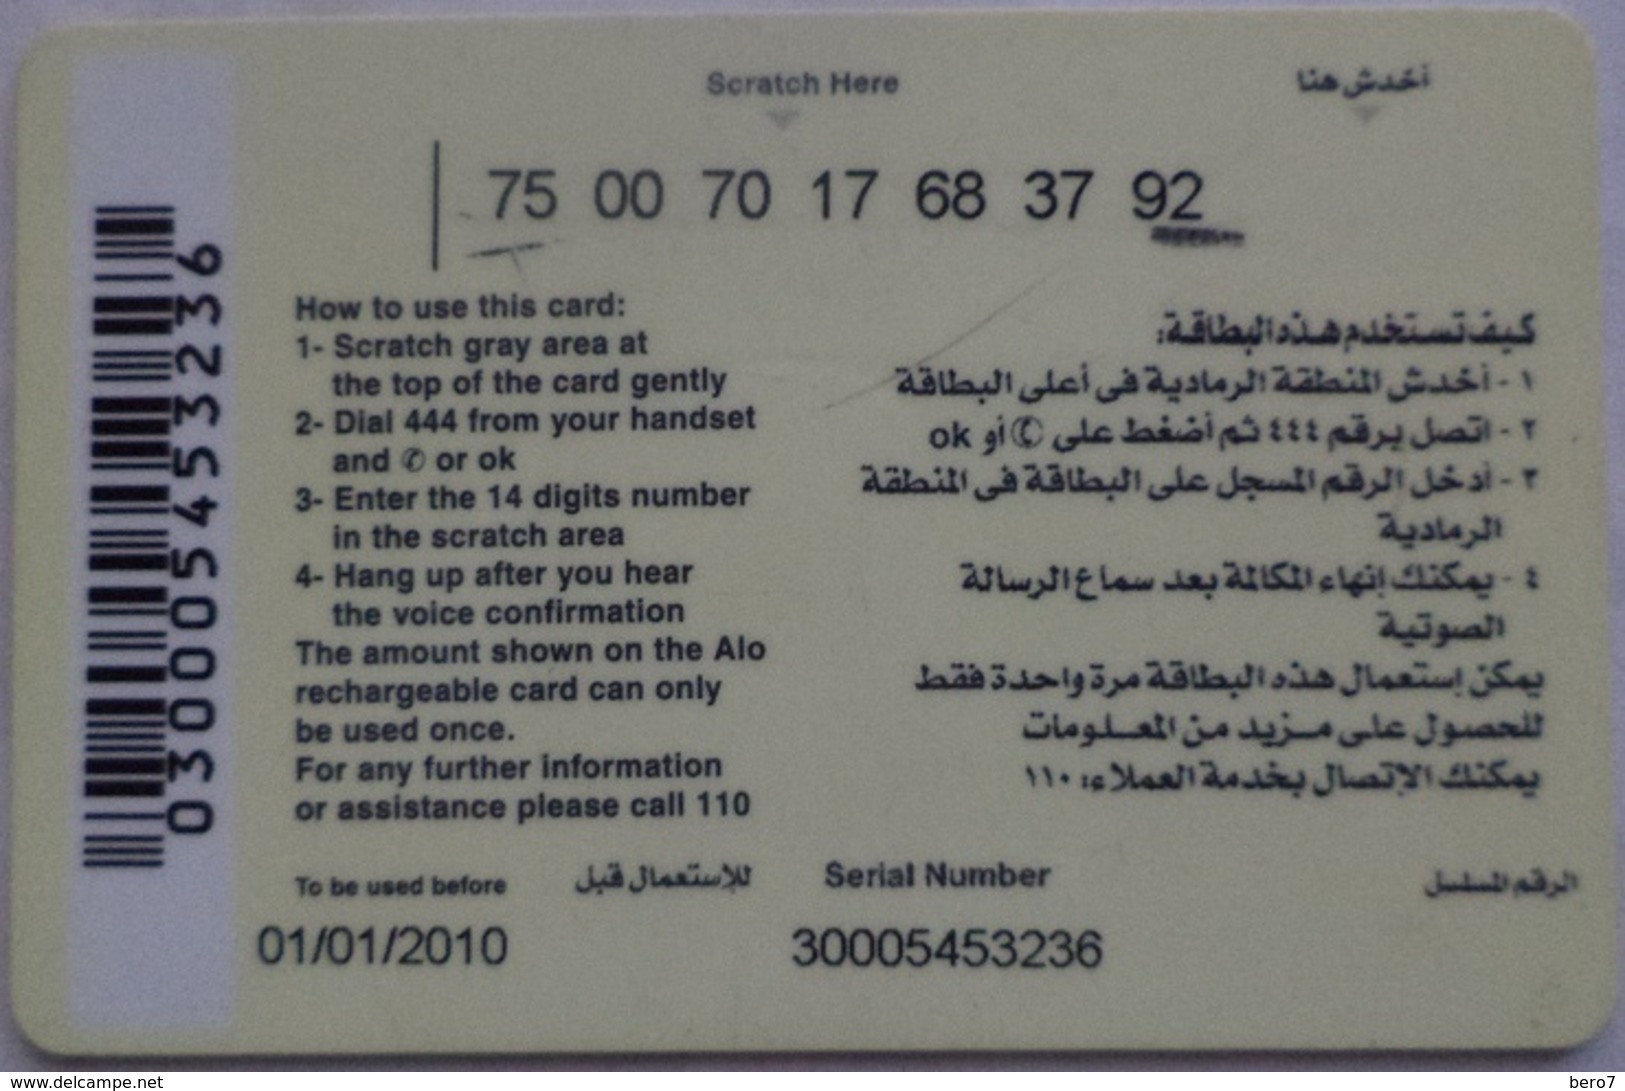 EGYPT - MobiNil Alo Prepaid Card 50 L.E., [USED] (Egypte) (Egitto) (Ägypten) (Egipto) (Egypten) - Egypte